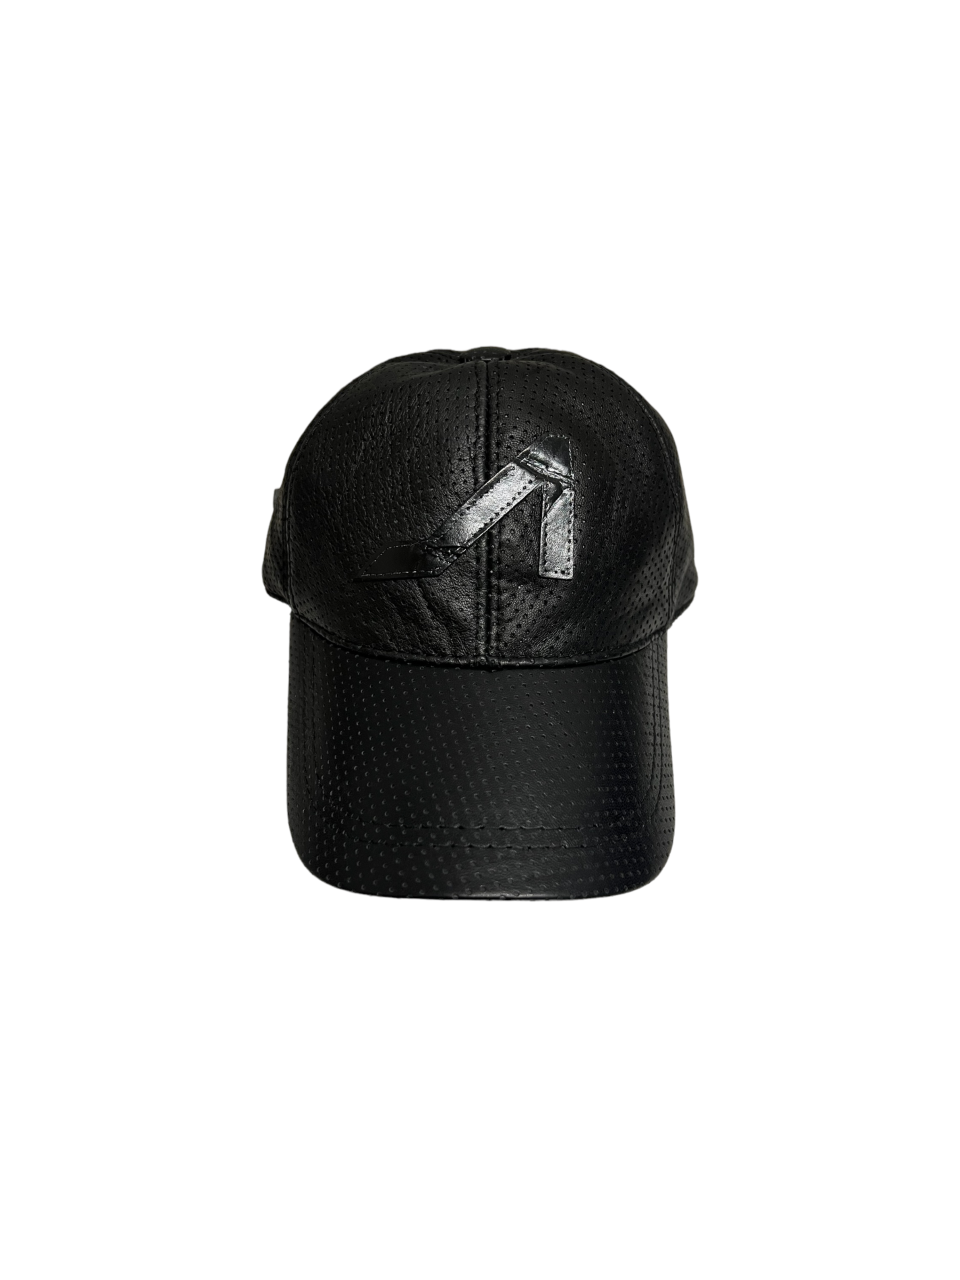 Apoli Perforated Black hat black logo